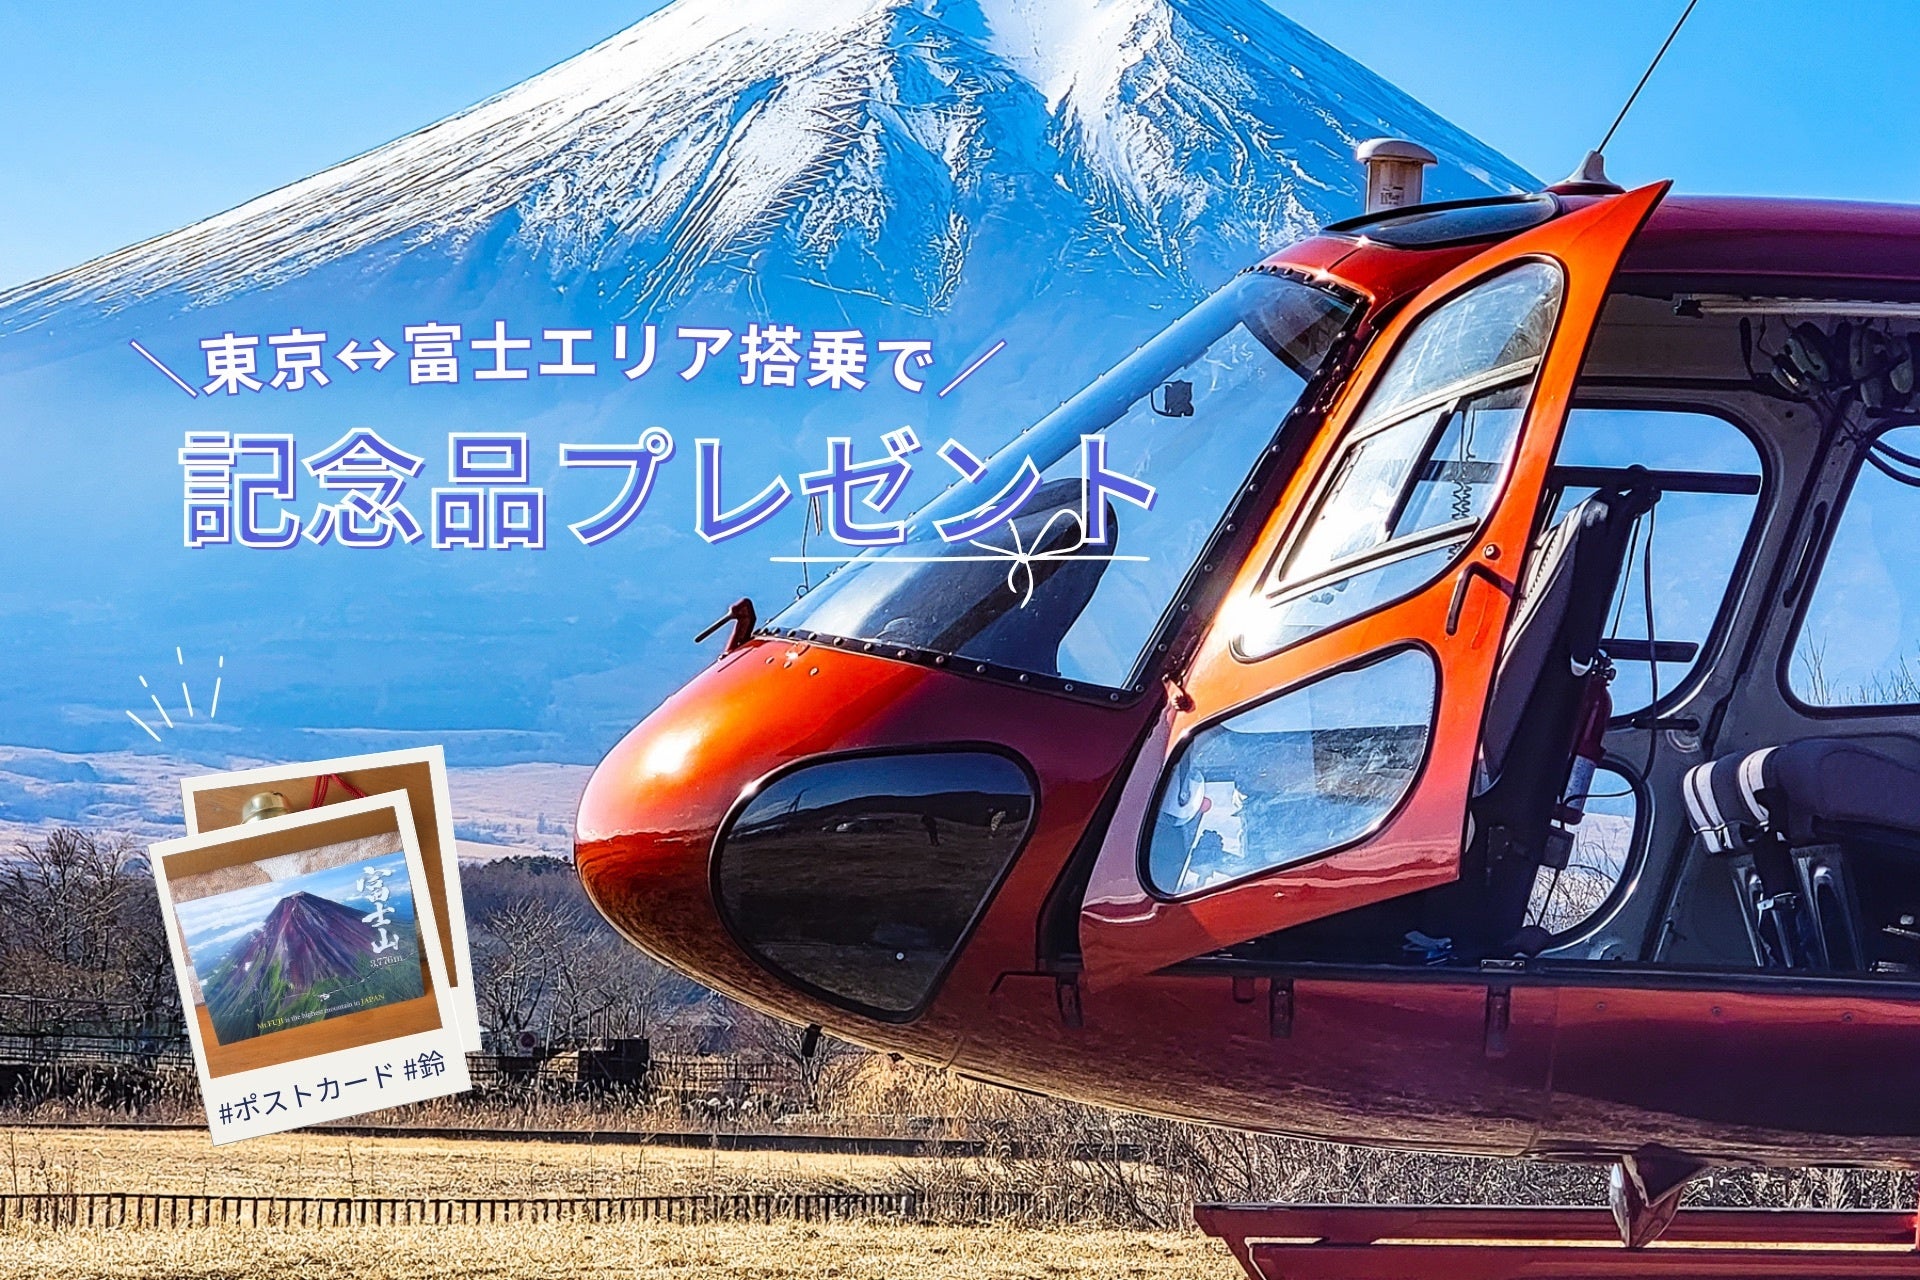 AirX、富士山五合目こみたけ売店と搭乗者限定プレゼントキャンペーン開催